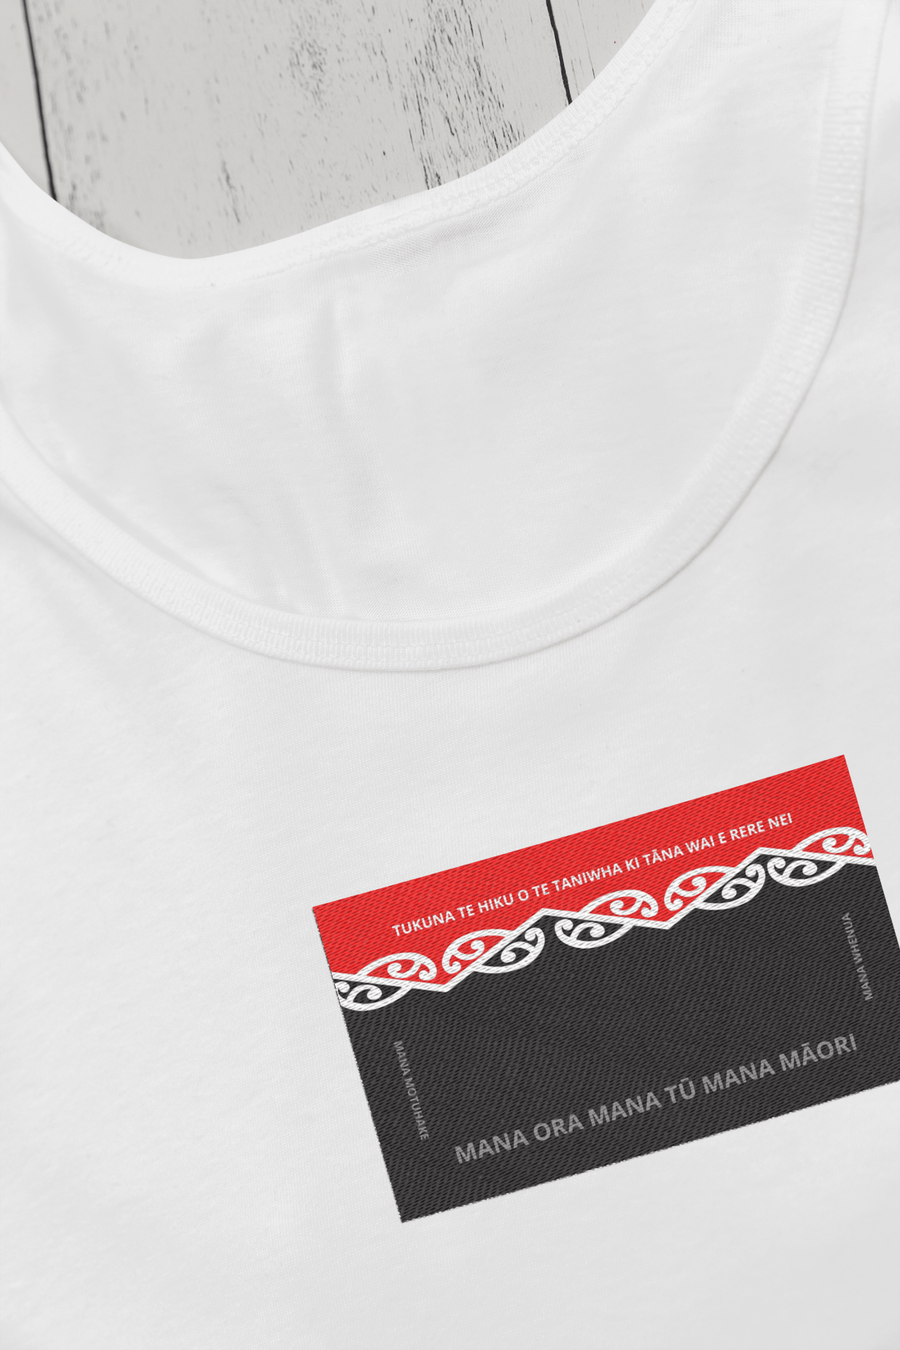 Ko te moko kākahu (official embroidered iron on taniwha logo for clothing) Whiti 